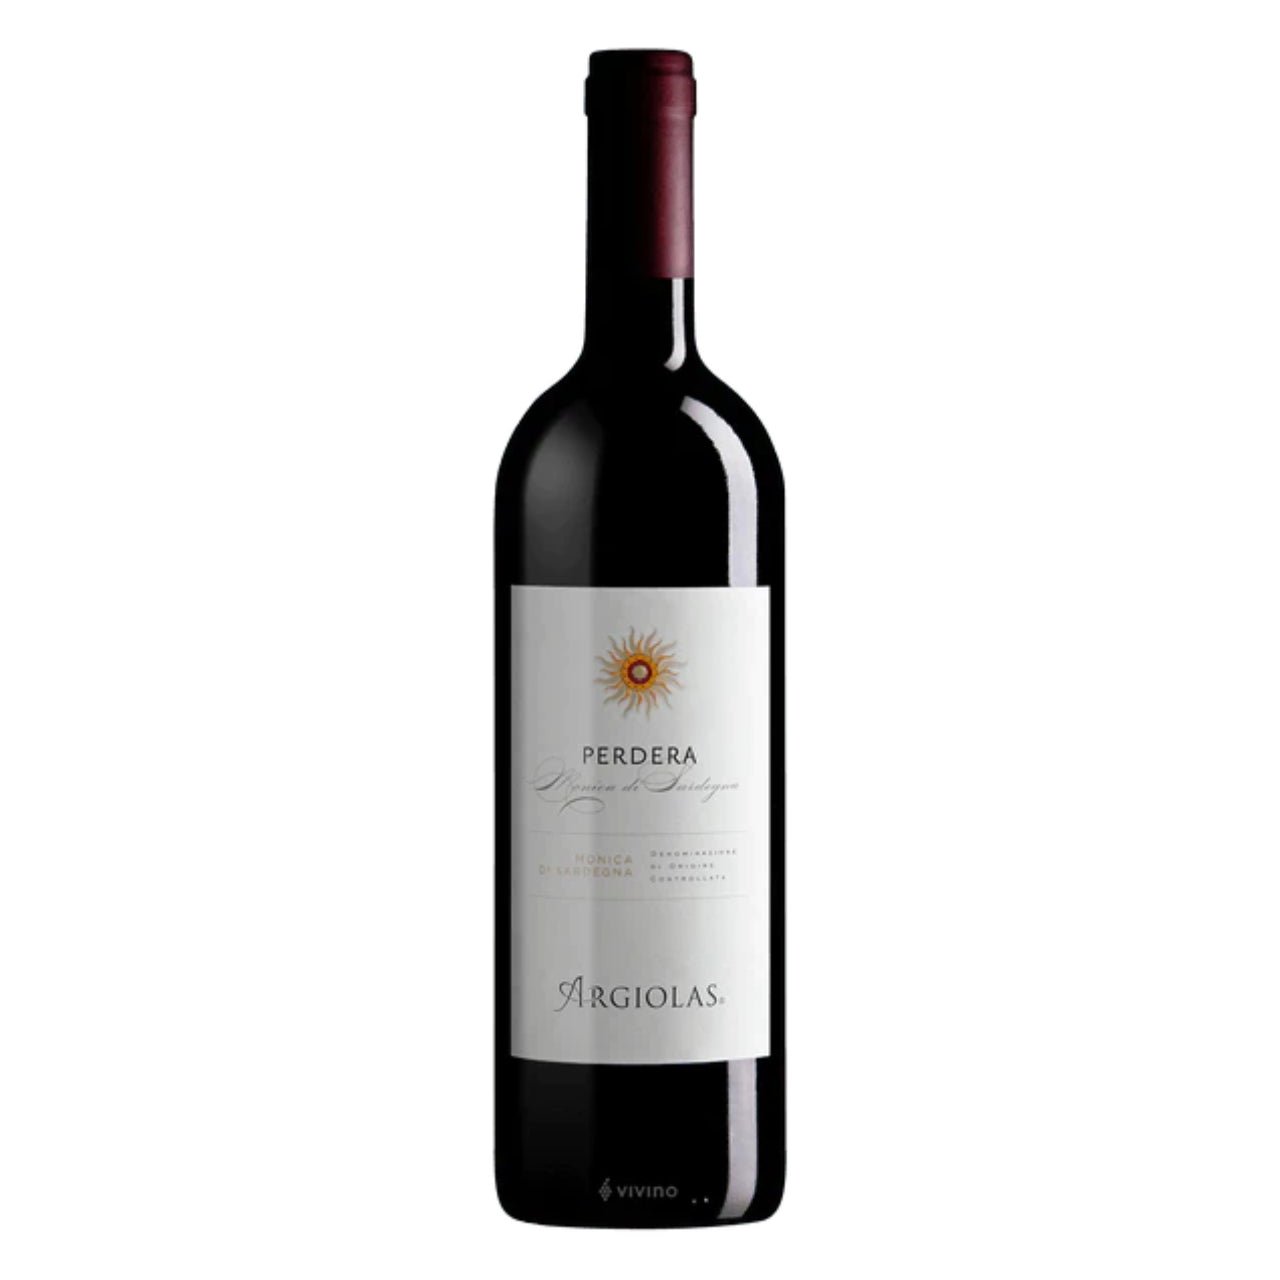 Cantine Argiolas 'Perdera' Monica di Sardegna 2020 - Wine Italy Red - Liquor Wine Cave